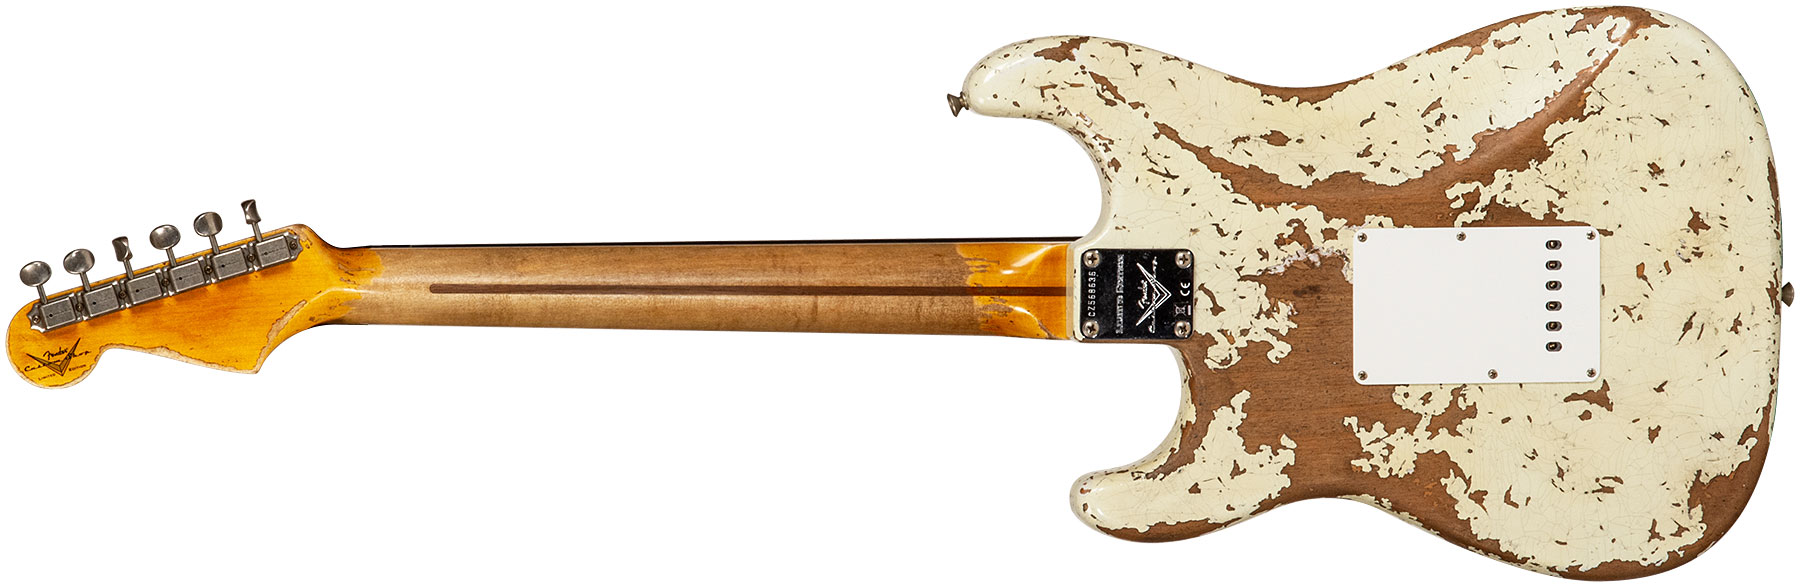 Fender Custom Shop Strat 1956 3s Trem Mn #cz568636 - Super Heavy Relic Aged India Ivory - Guitare Électrique Forme Str - Variation 1